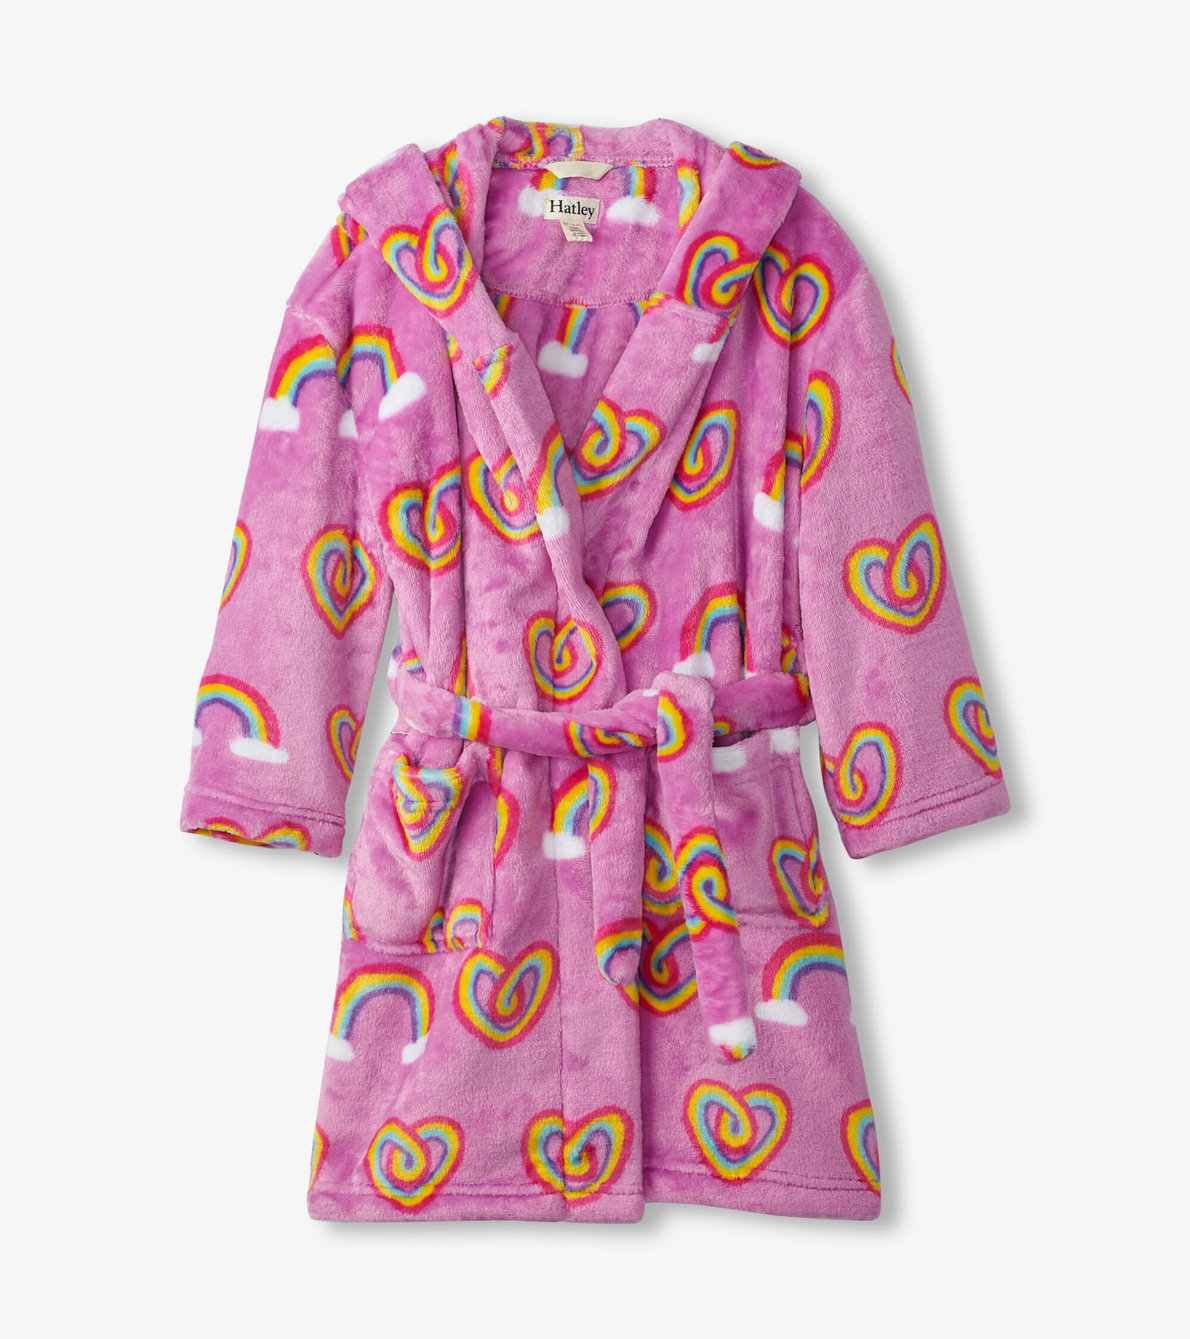 View larger image of Twisty Rainbow Hearts Fleece Robe